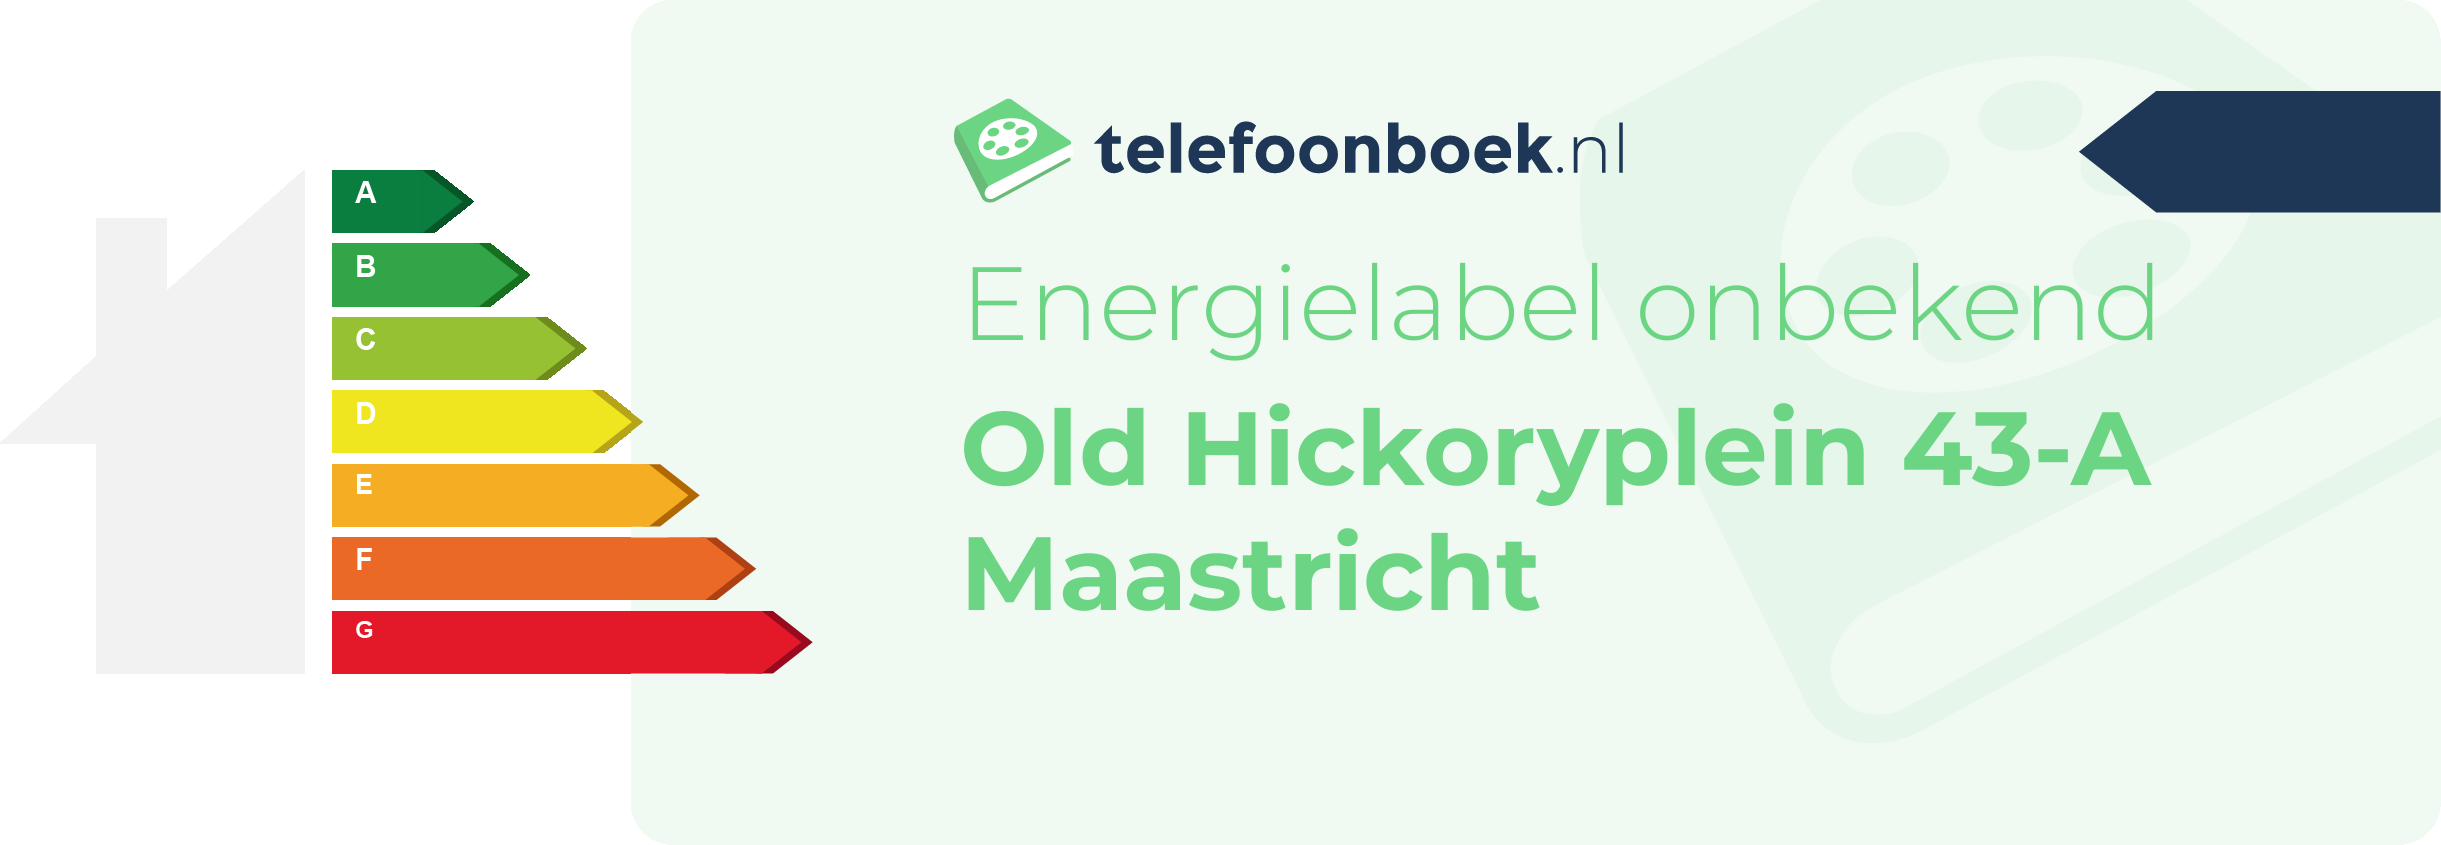 Energielabel Old Hickoryplein 43-A Maastricht